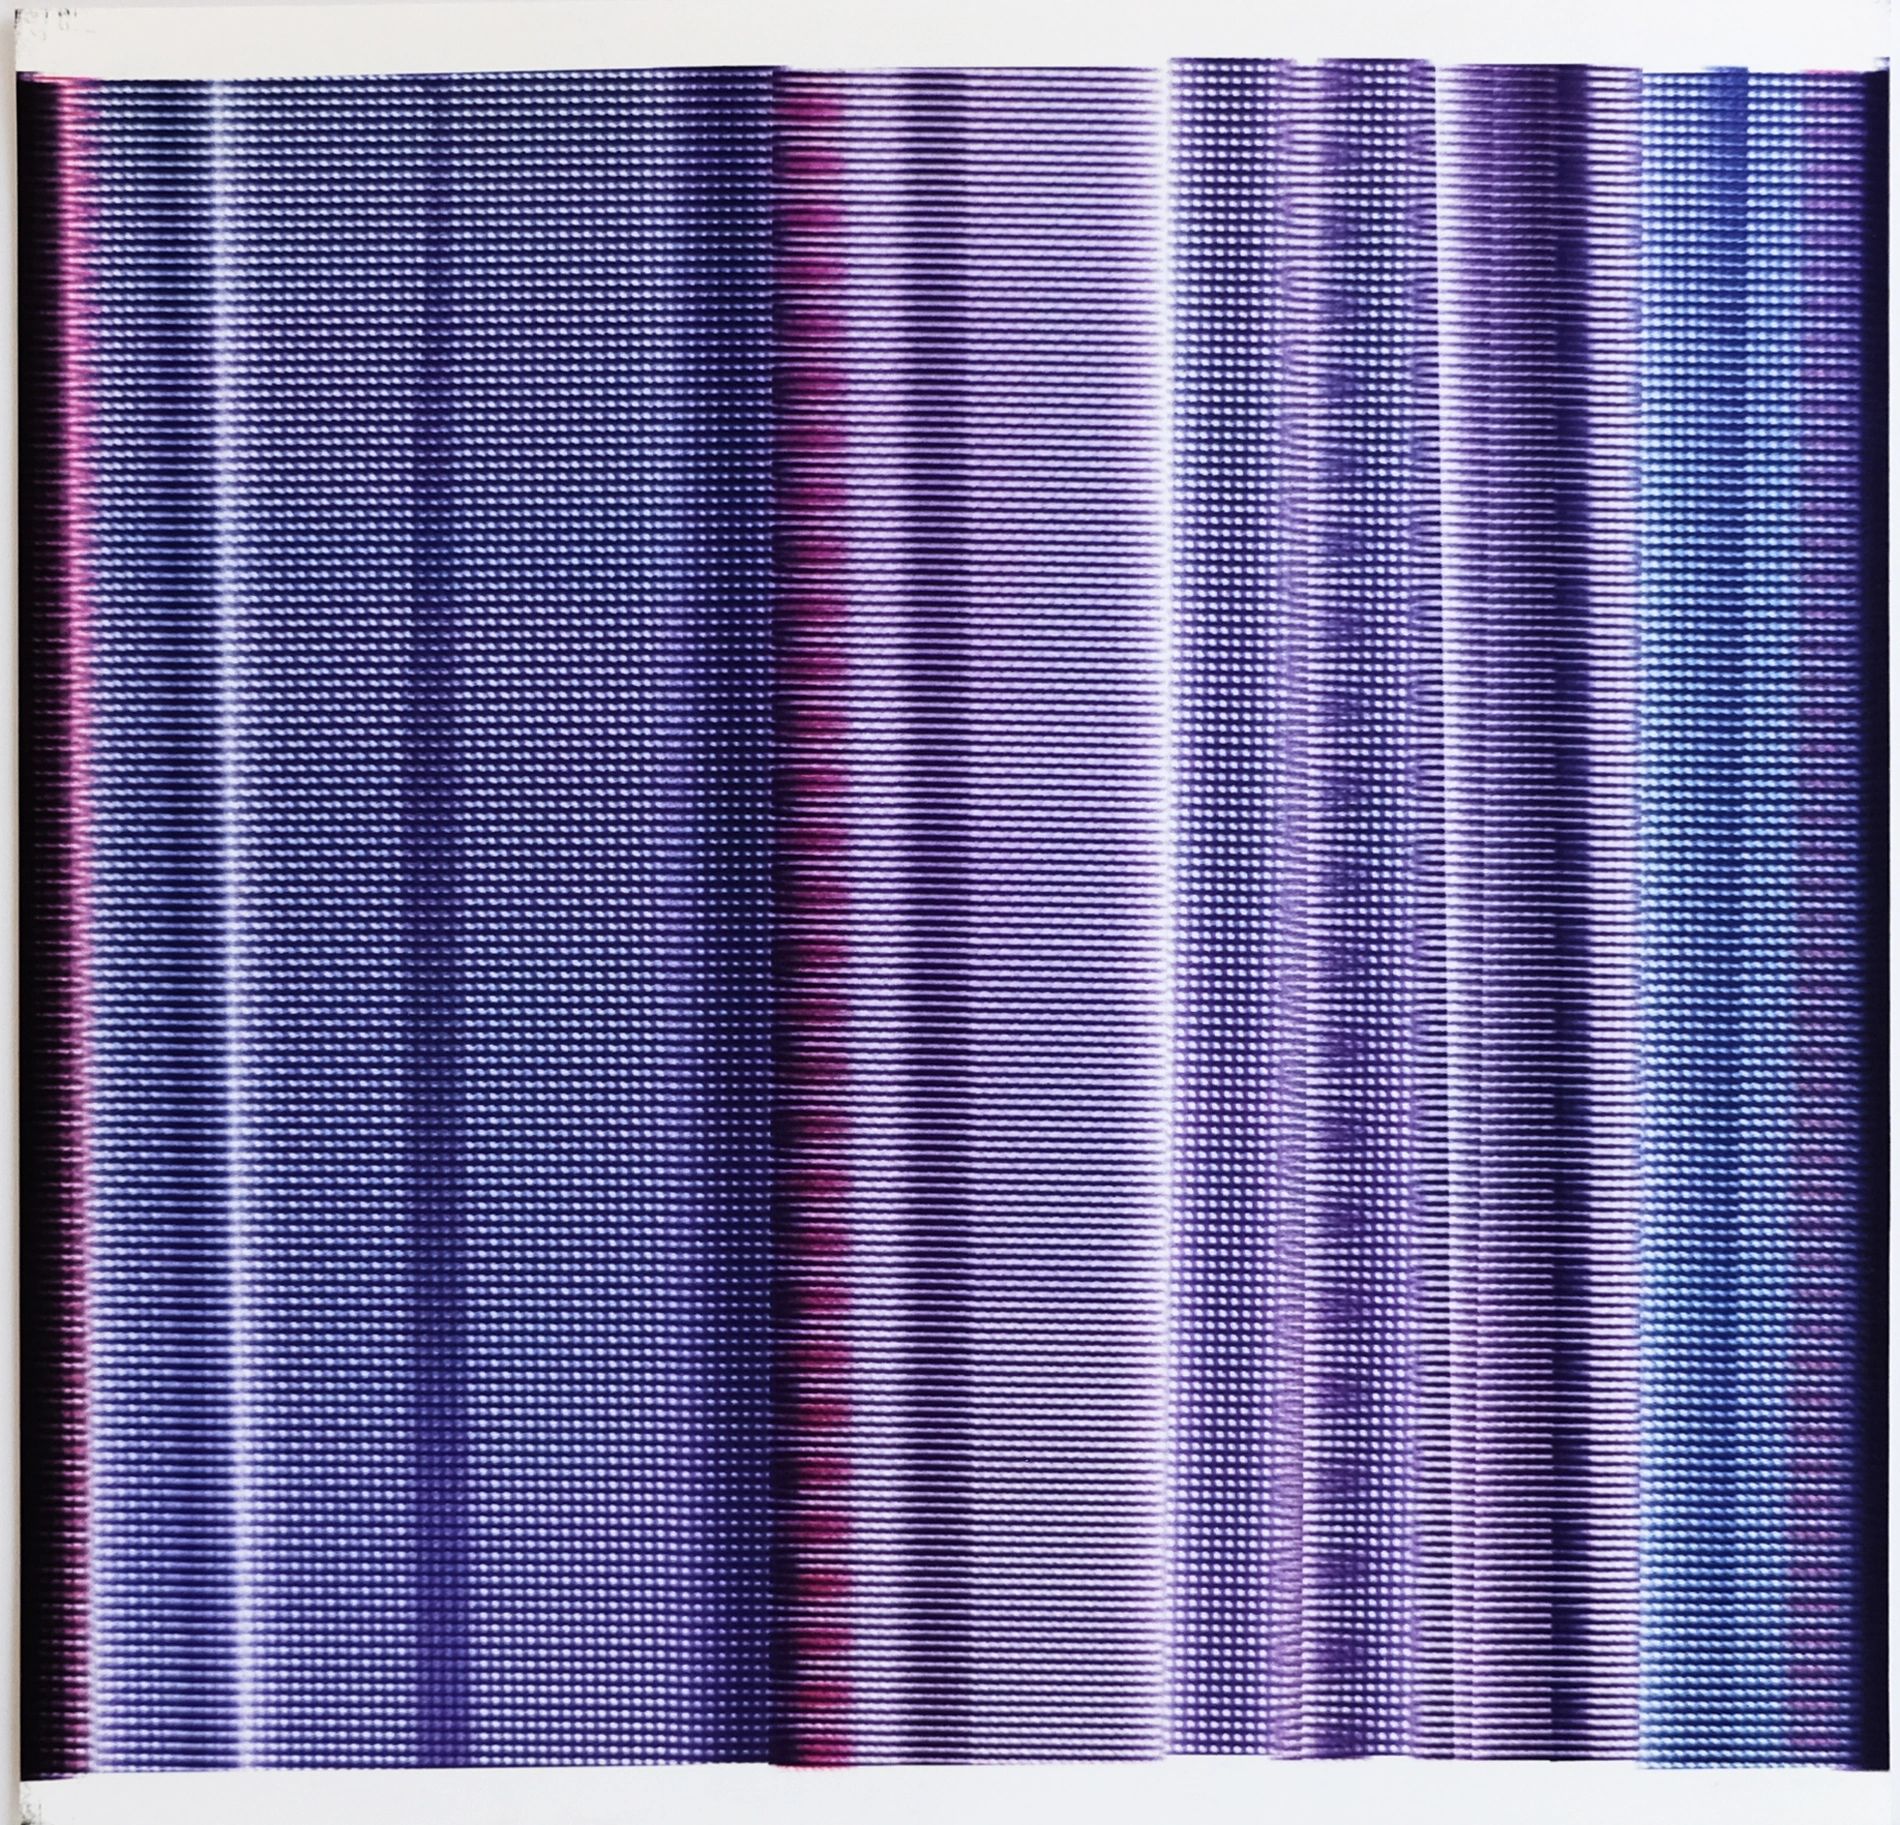 Printer manipulations, Digital Print on Fiber Rag paper
13”x13.5”, (33cm x 34.2cm)  - 1/1
2020
SOLD 